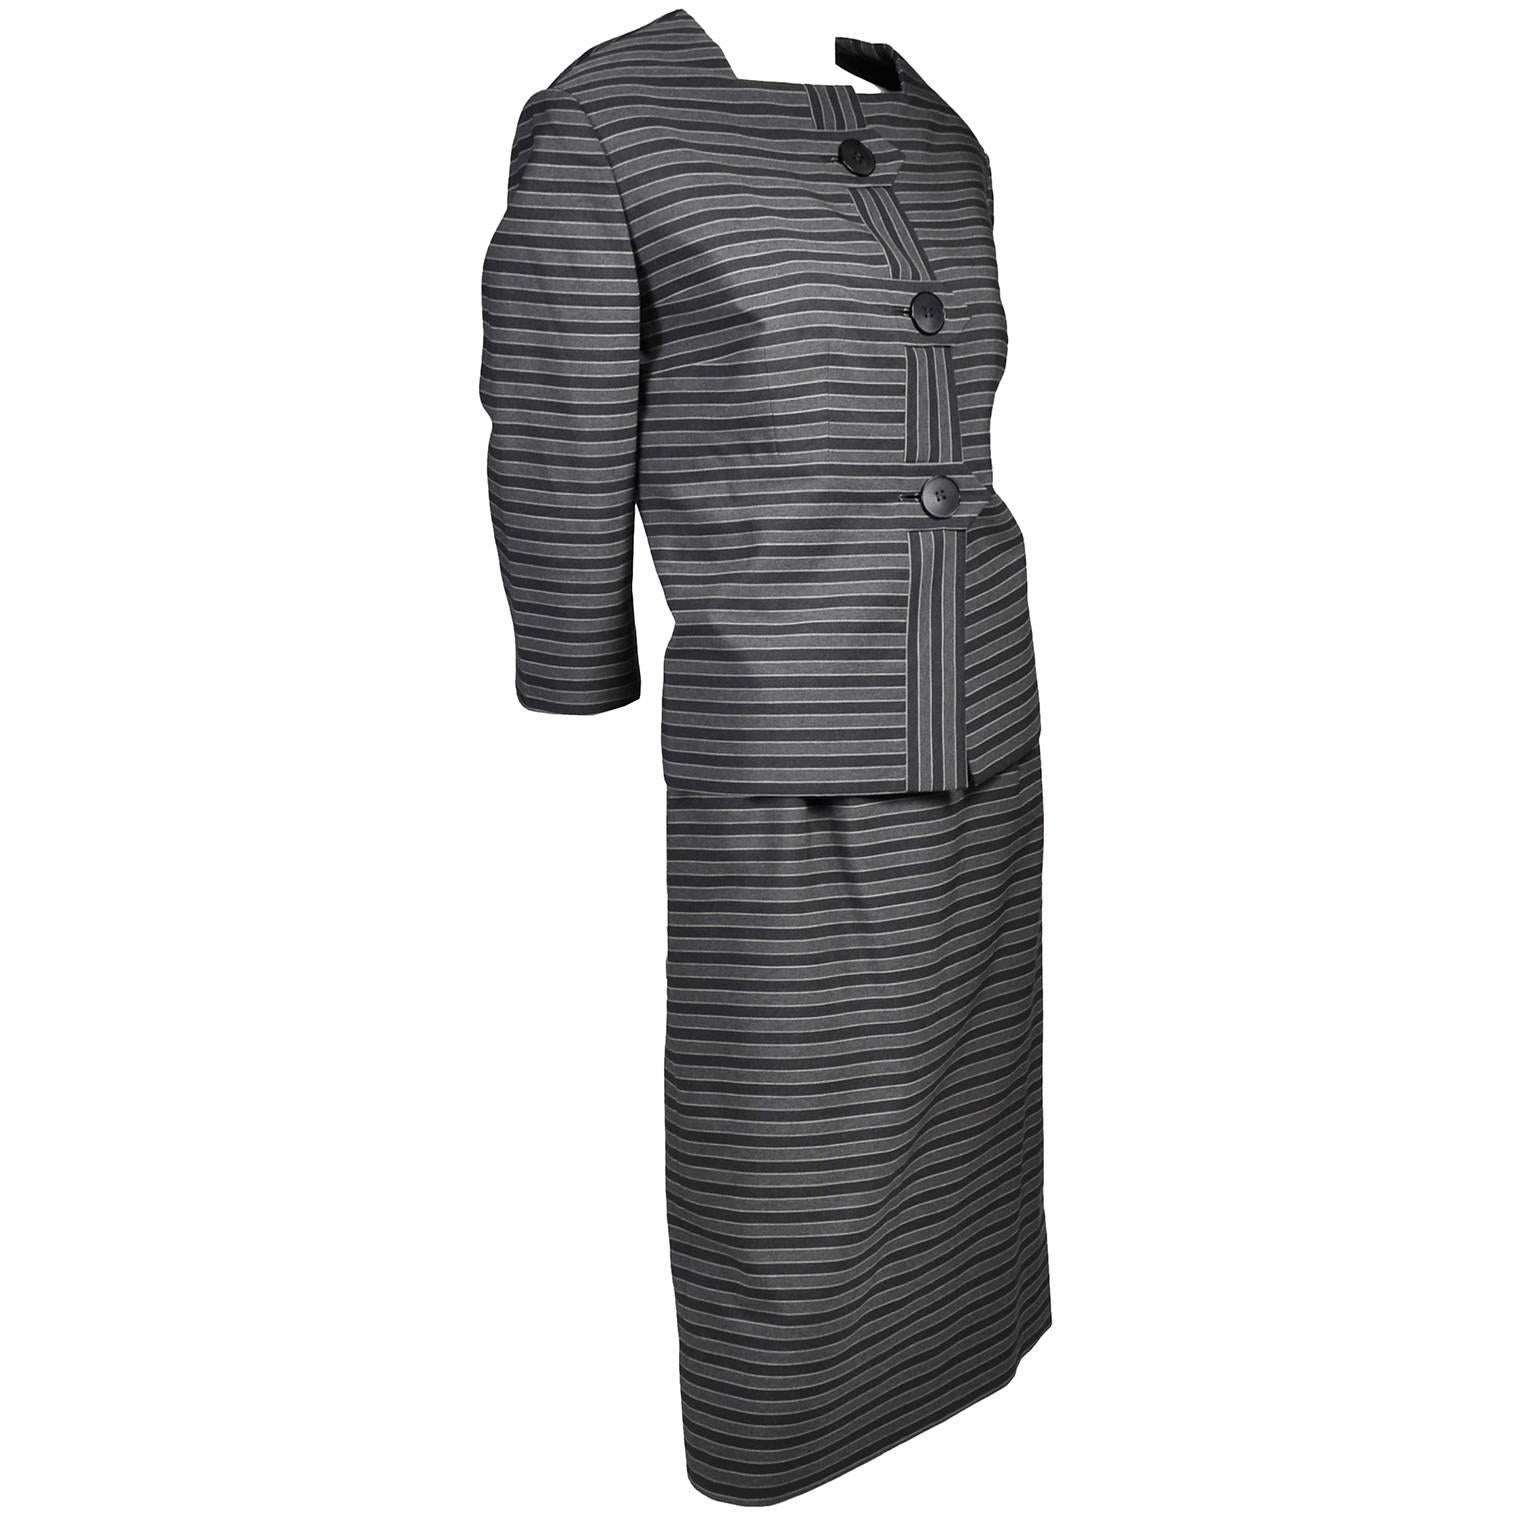 1960s Vintage Irene Lentz Suit from Bullocks Wilshire in Gray and Black Stripes